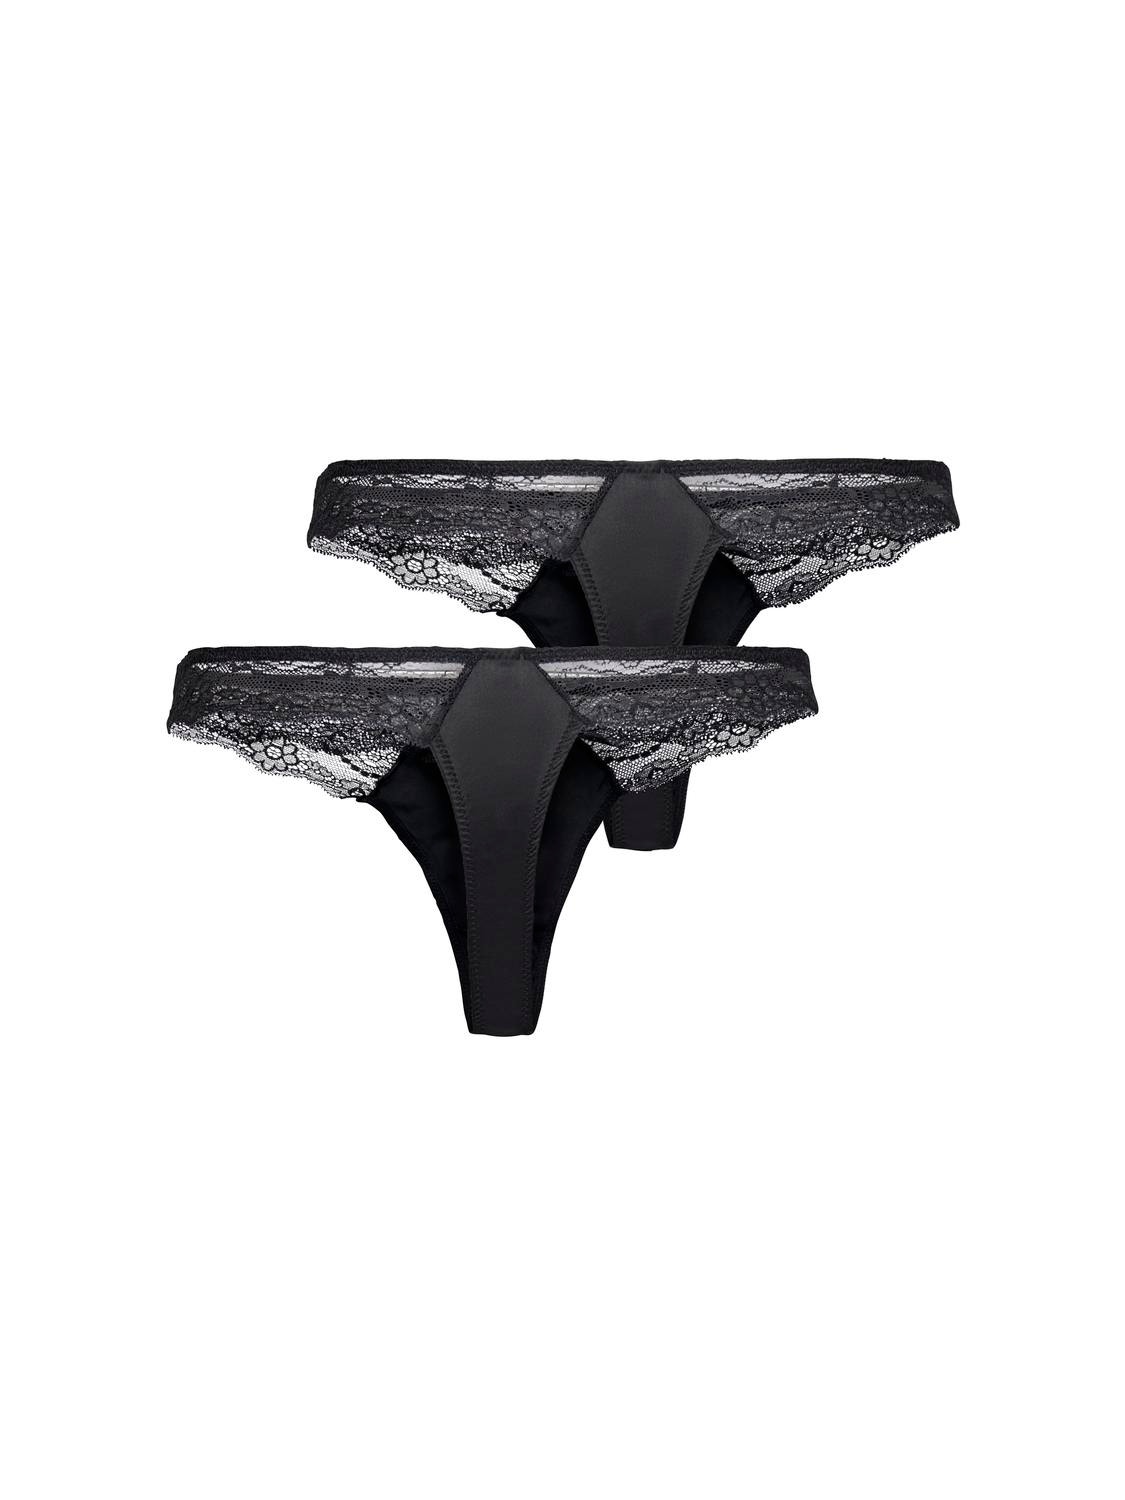 QueenoftheHF on X: Selling used panties, UK 14 Black Lace Thong